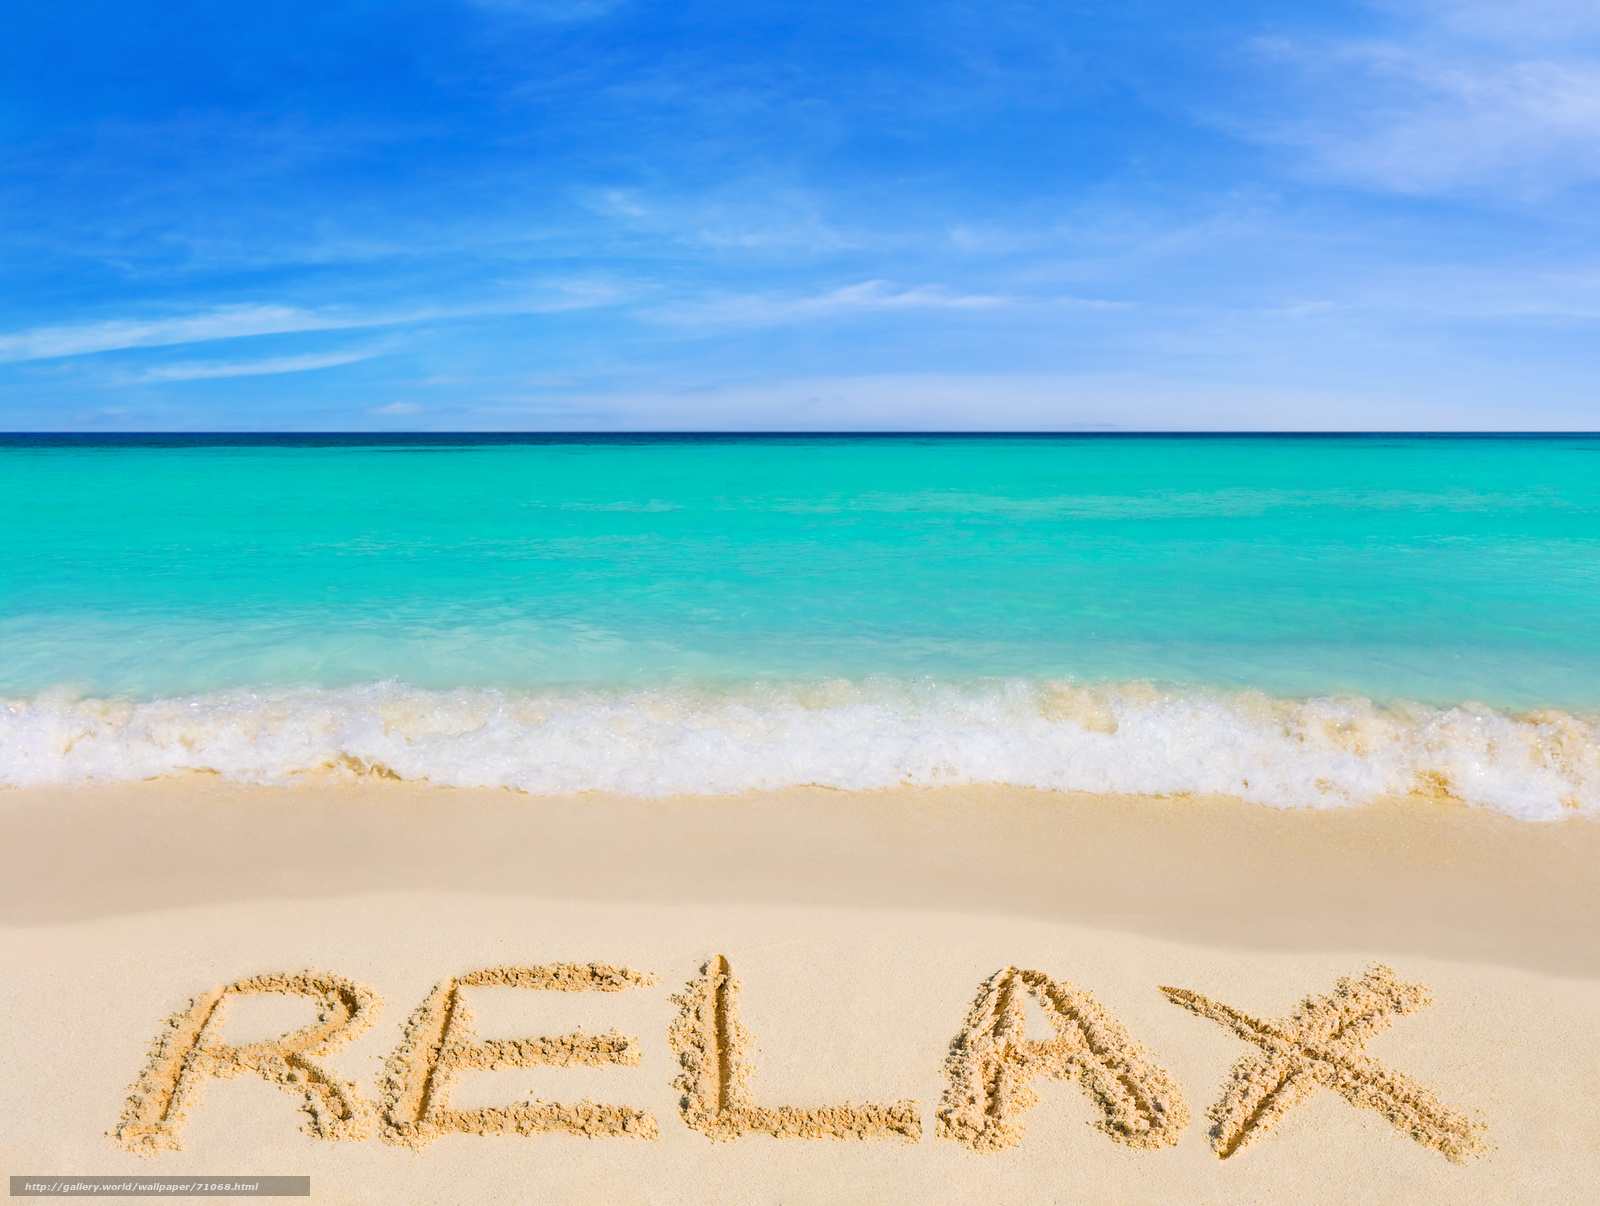 Download wallpaper nature beach ocean view free desktop wallpaper